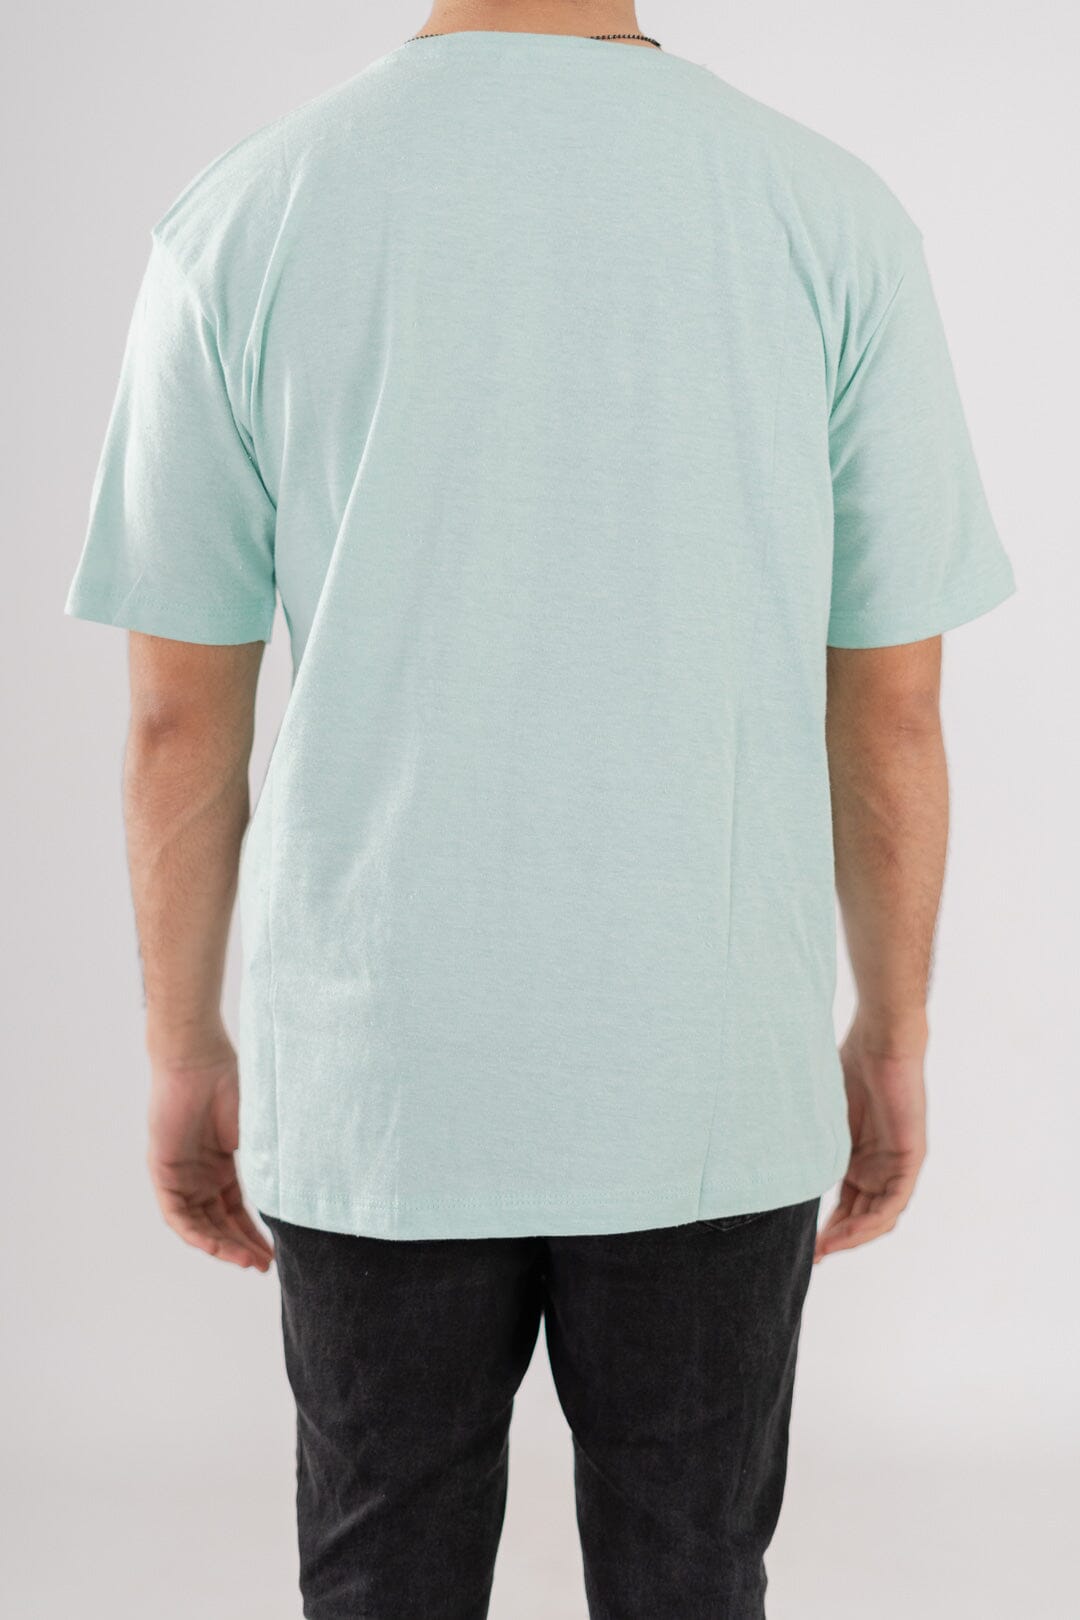 Blend Men's Workers Printed Tee Shirt Men's Tee Shirt IST 